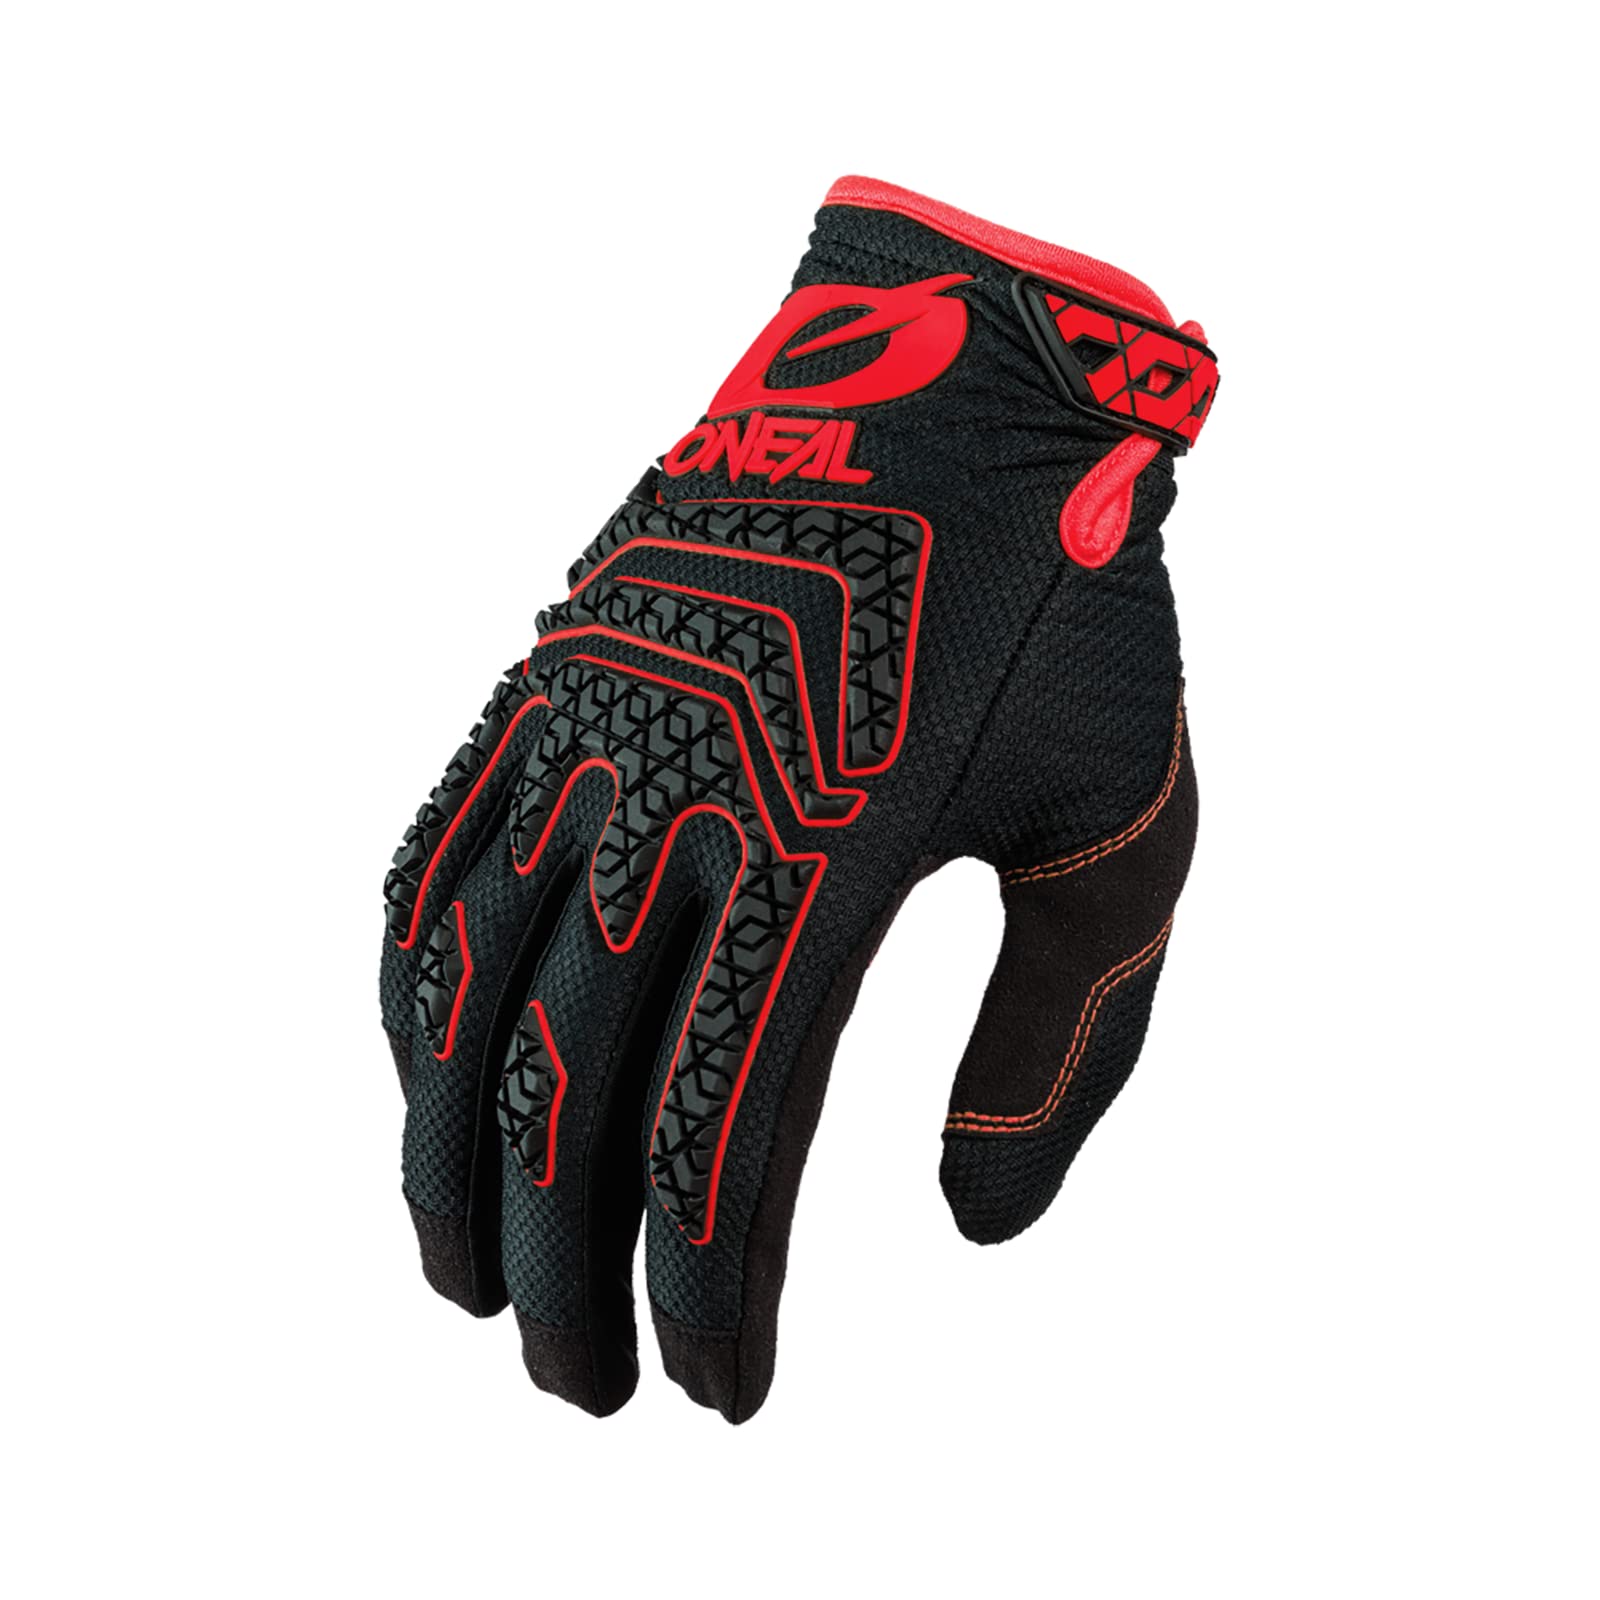 O'NEAL | Fahrrad- & Motocross-Handschuhe | MX MTB DH FR Downhill Freeride | Langlebige, Flexible Materialien, Silikonprint für Grip | Sniper Elite Glove | Erwachsene | Schwarz Rot | Größe L von O'NEAL